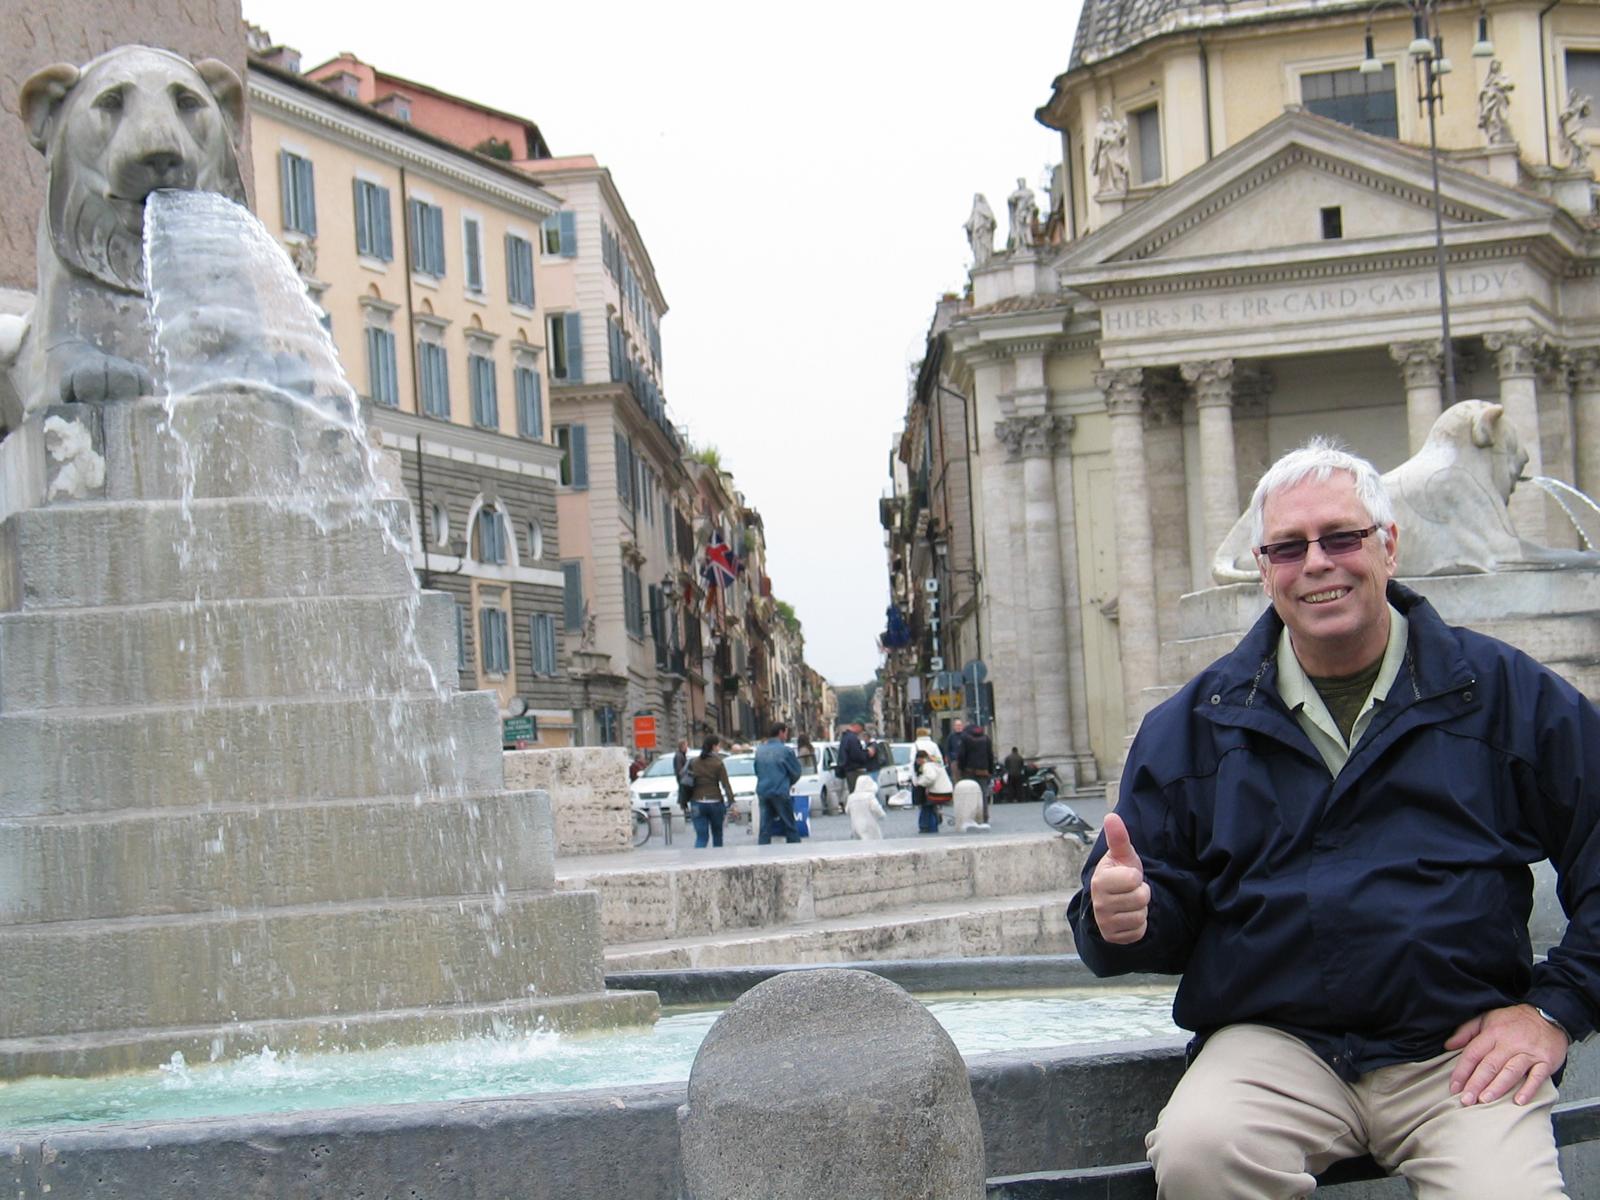 Dad at Piazza Popoli